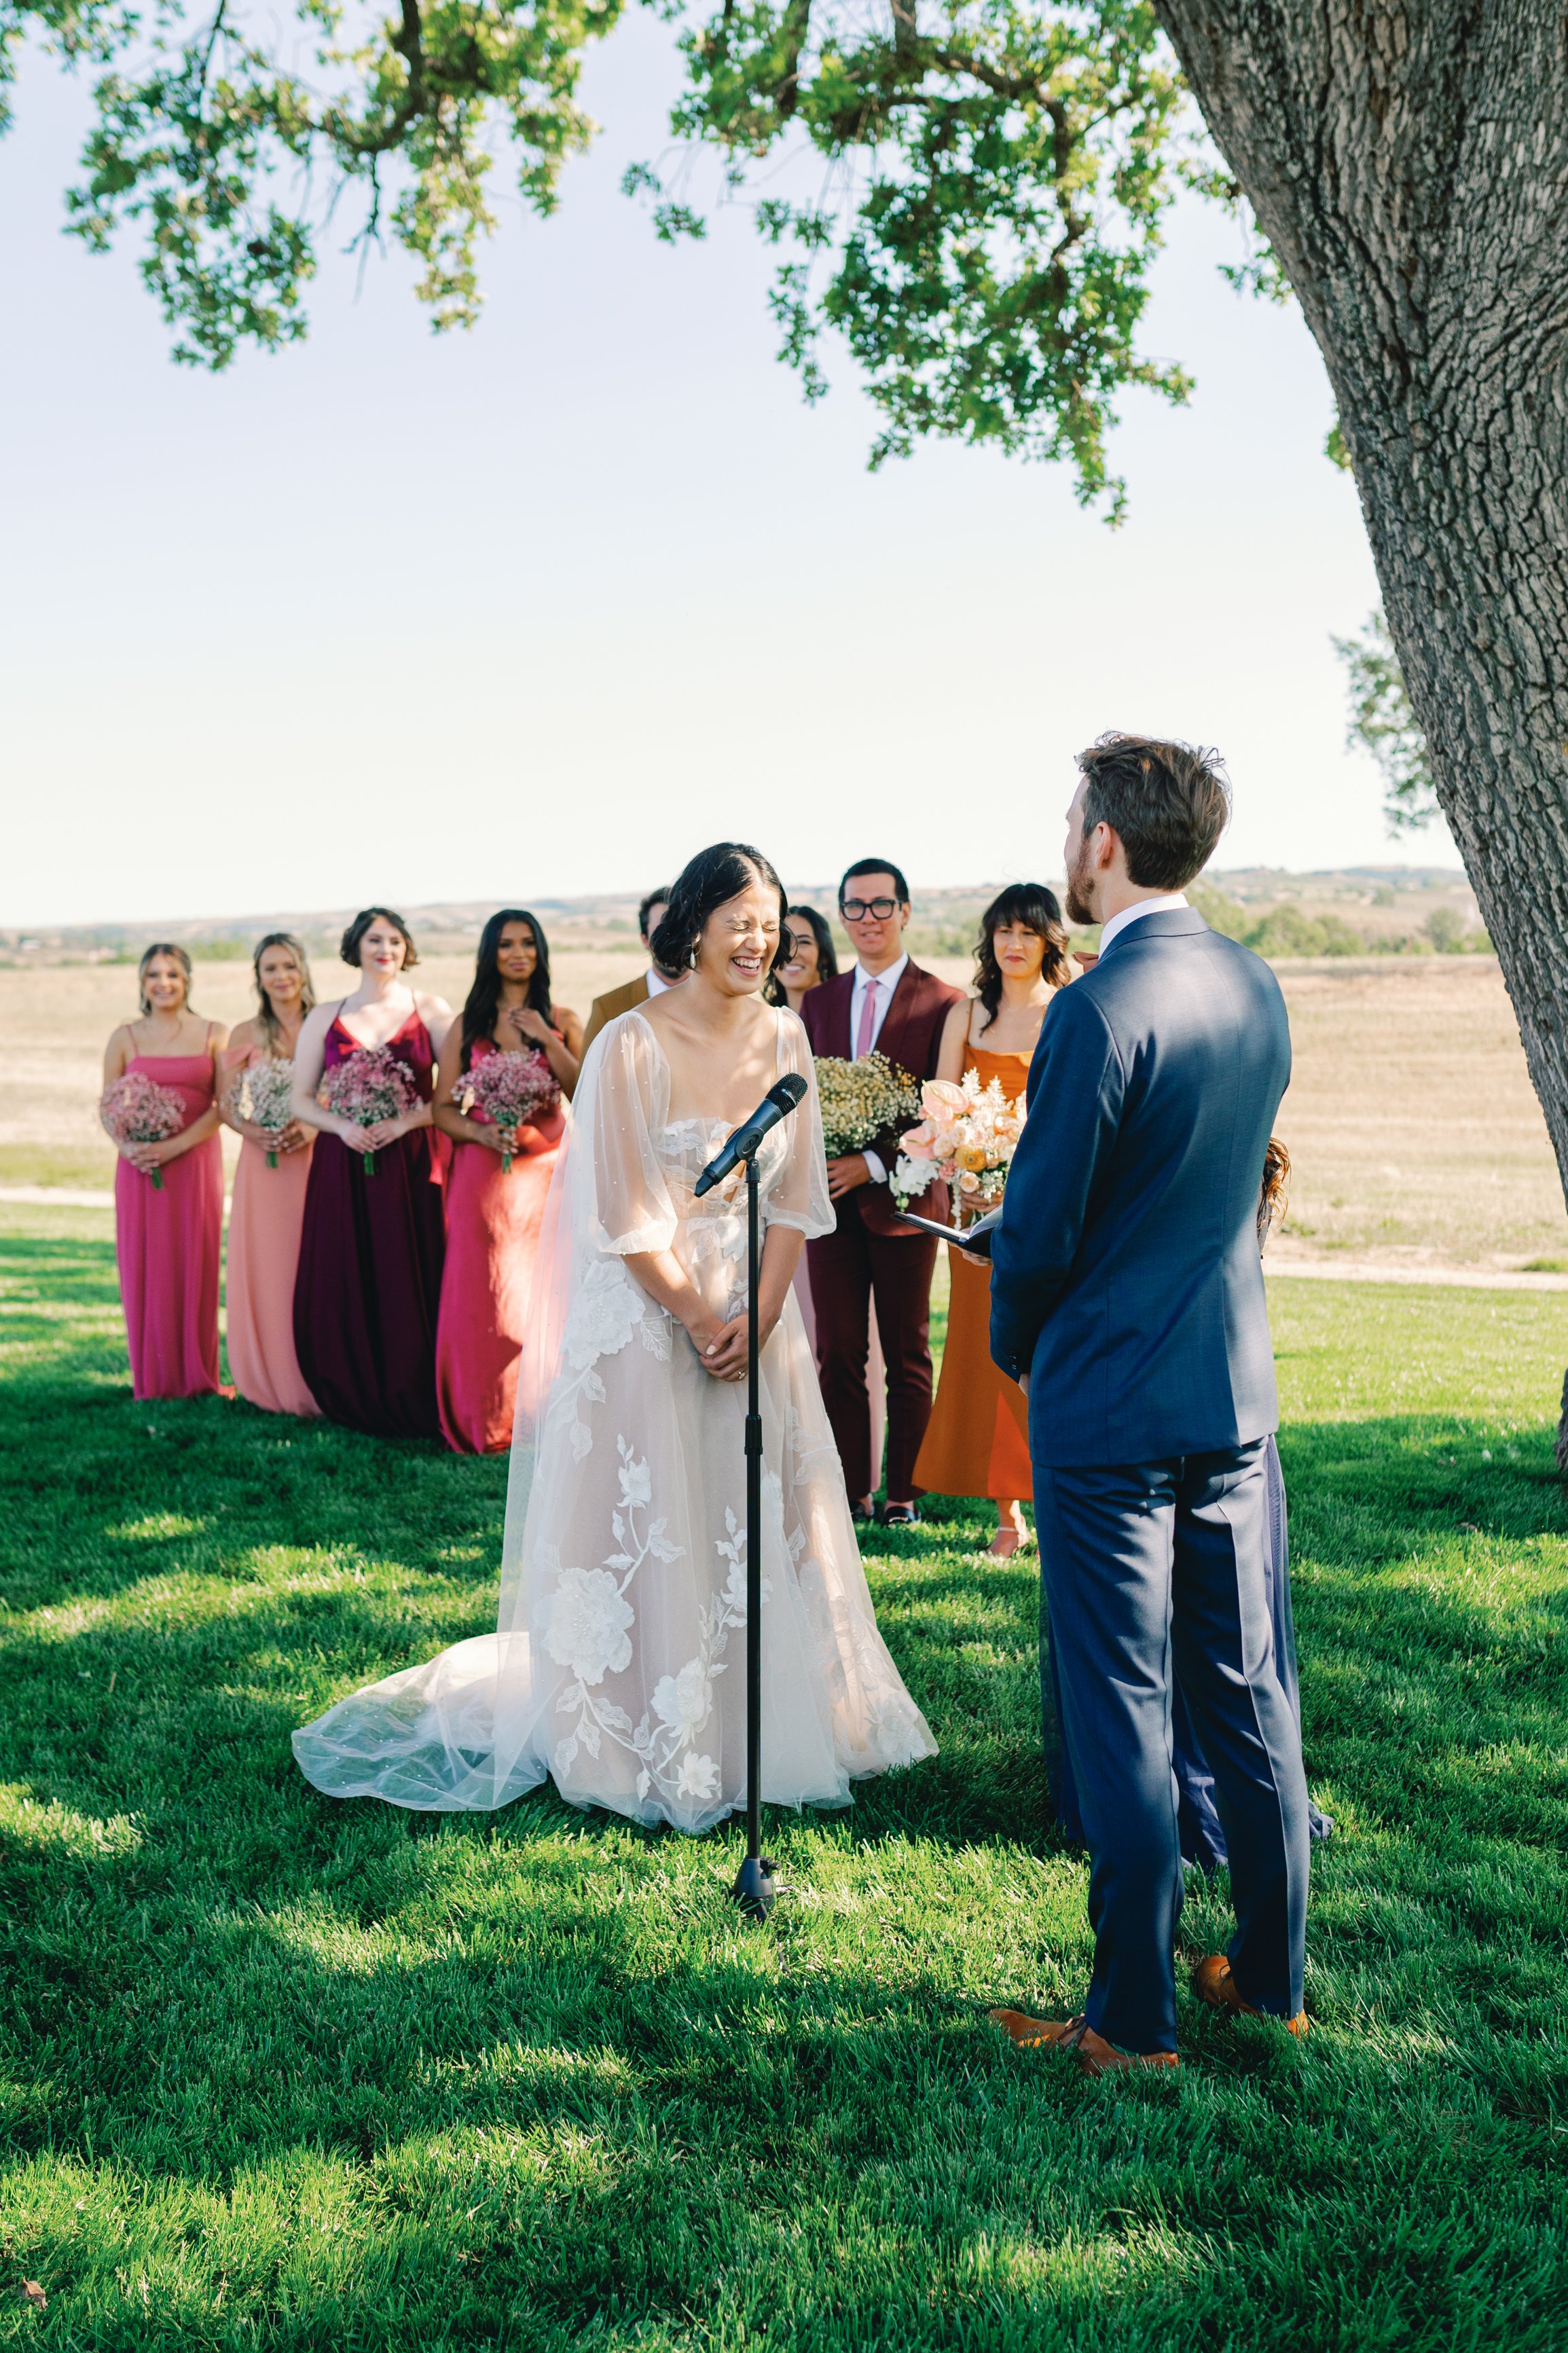 www.santabarbarawedding.com | Augusta Ottillia Photography | Megan Rose Events | Fallen Oaks Estate | Brooke Edelman | All About Events | Meagan Fondren | The Ceremony